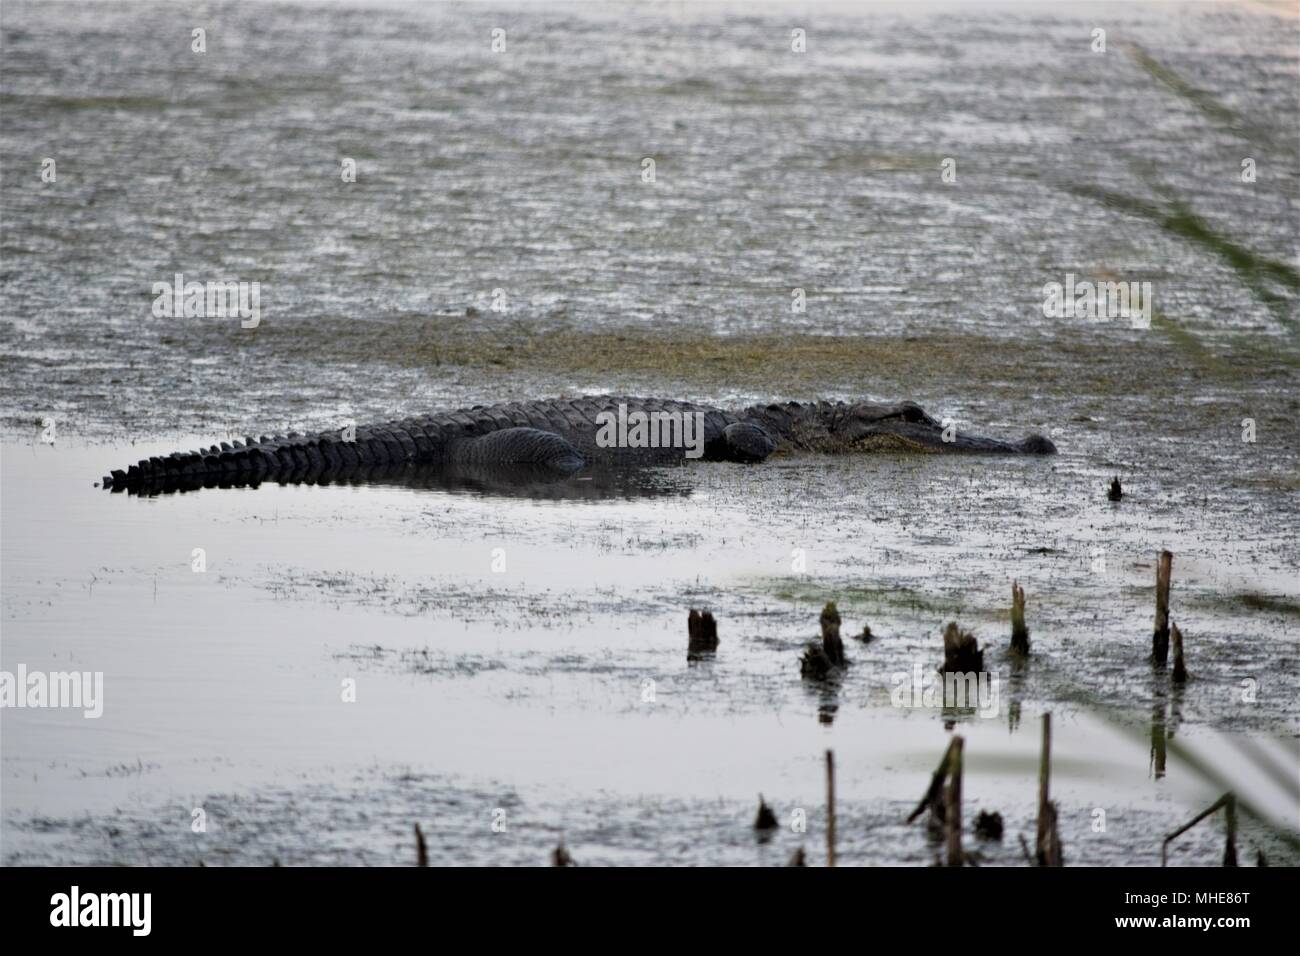 Texas Alligator Stock Photo